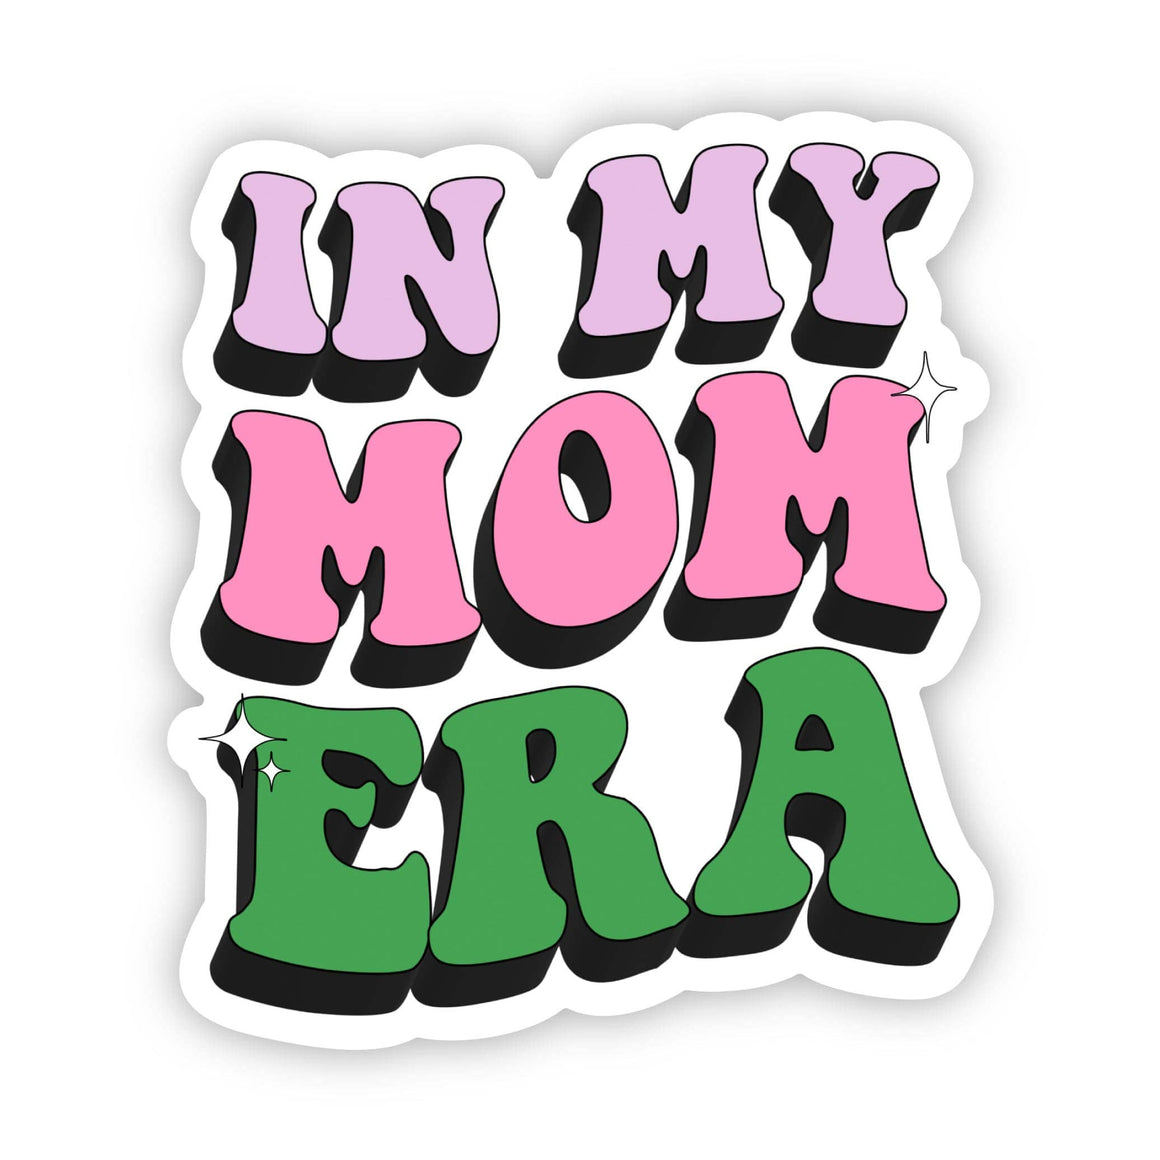 In My Mom Era Sticker